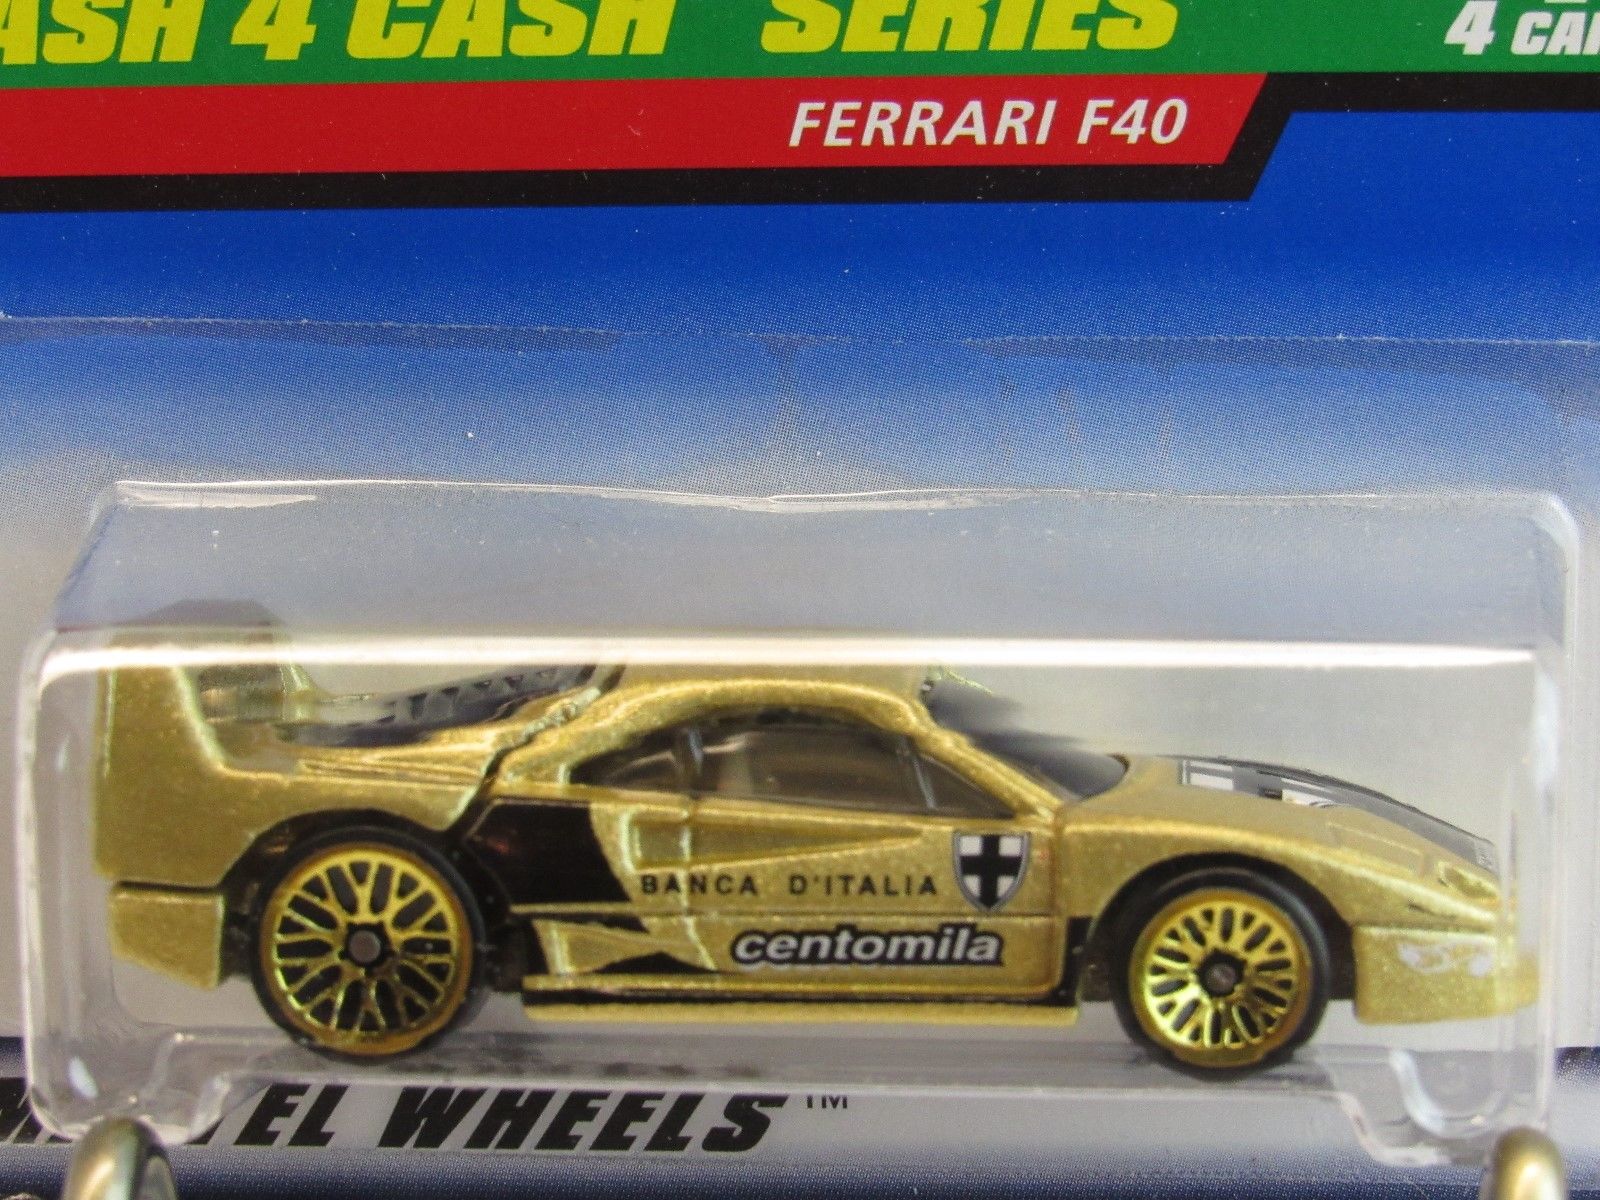 hot wheels dash 4 cash series ferrari f40